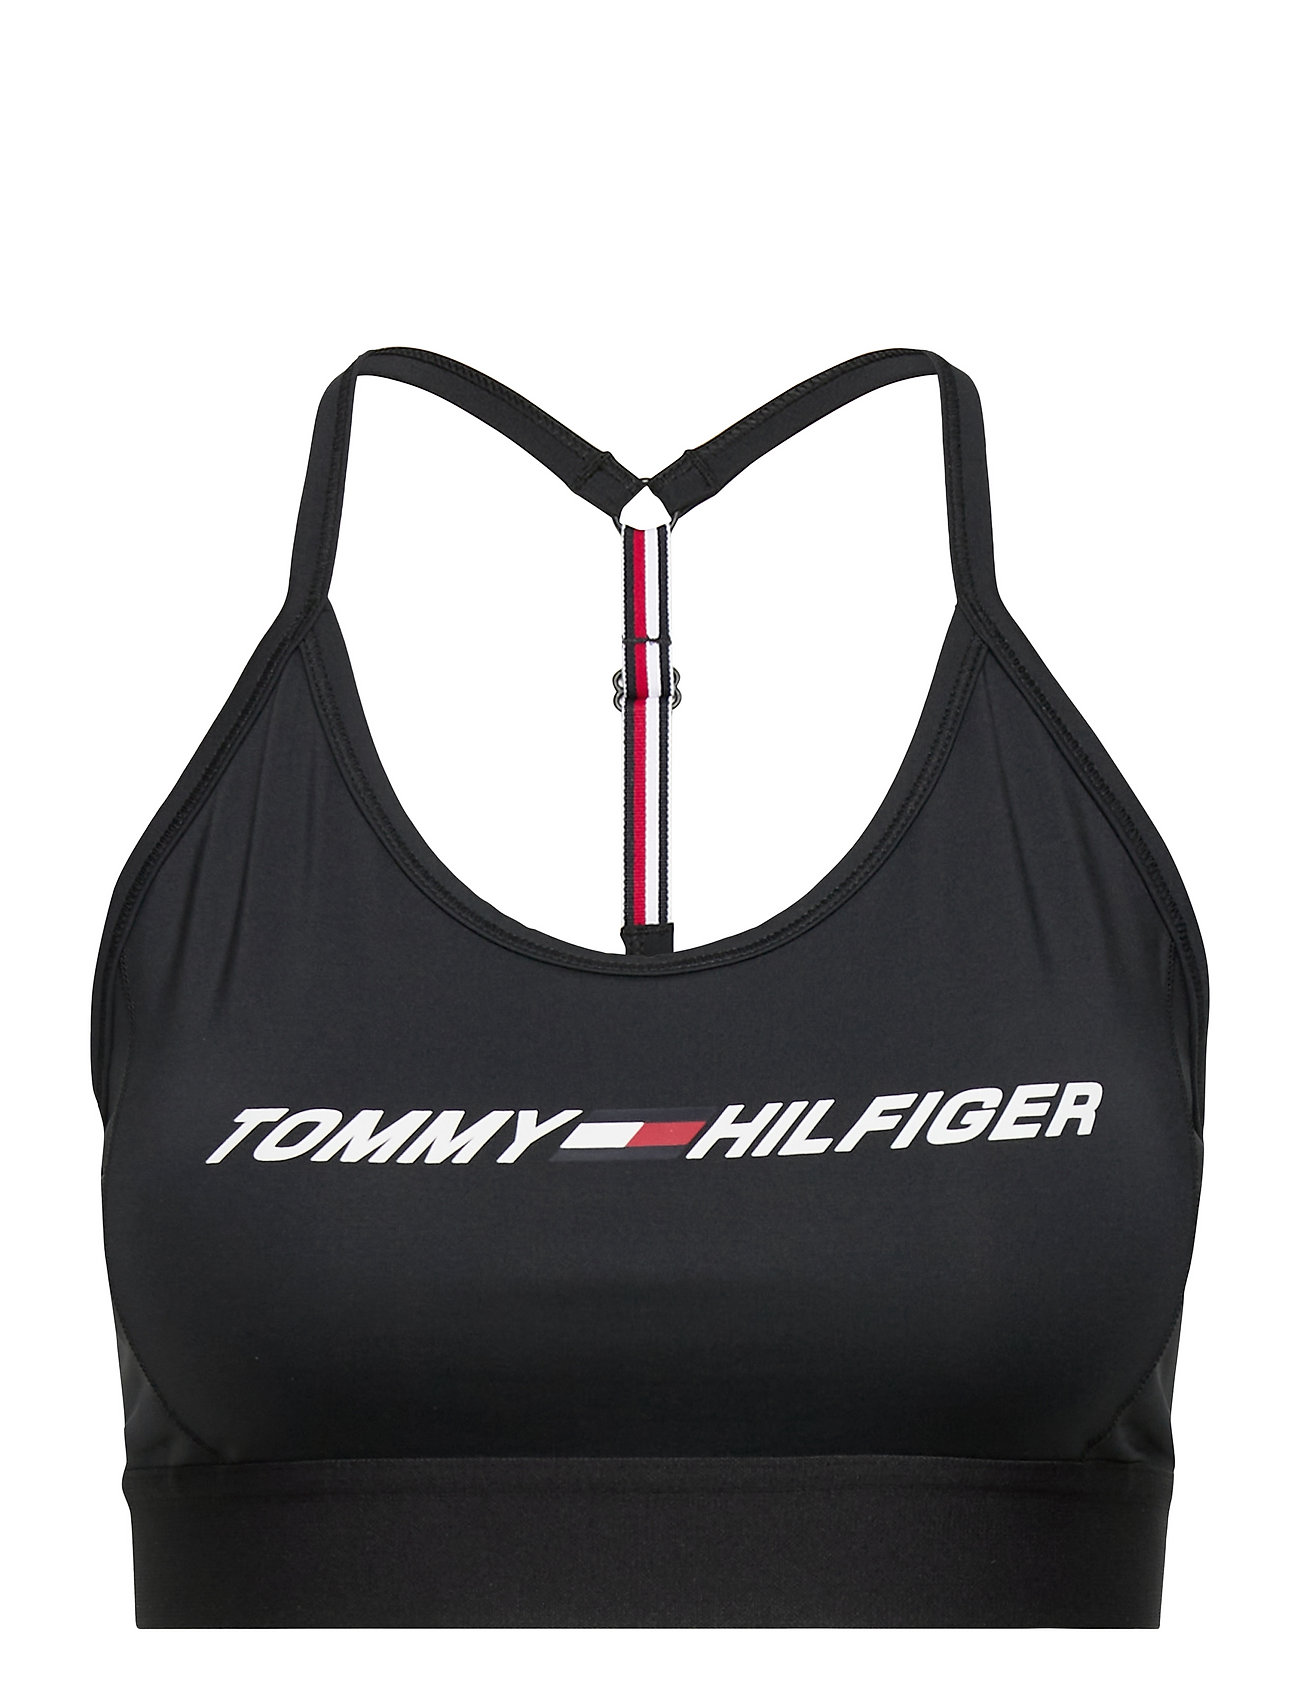 Tommy Hilfiger Sport sports bra in black